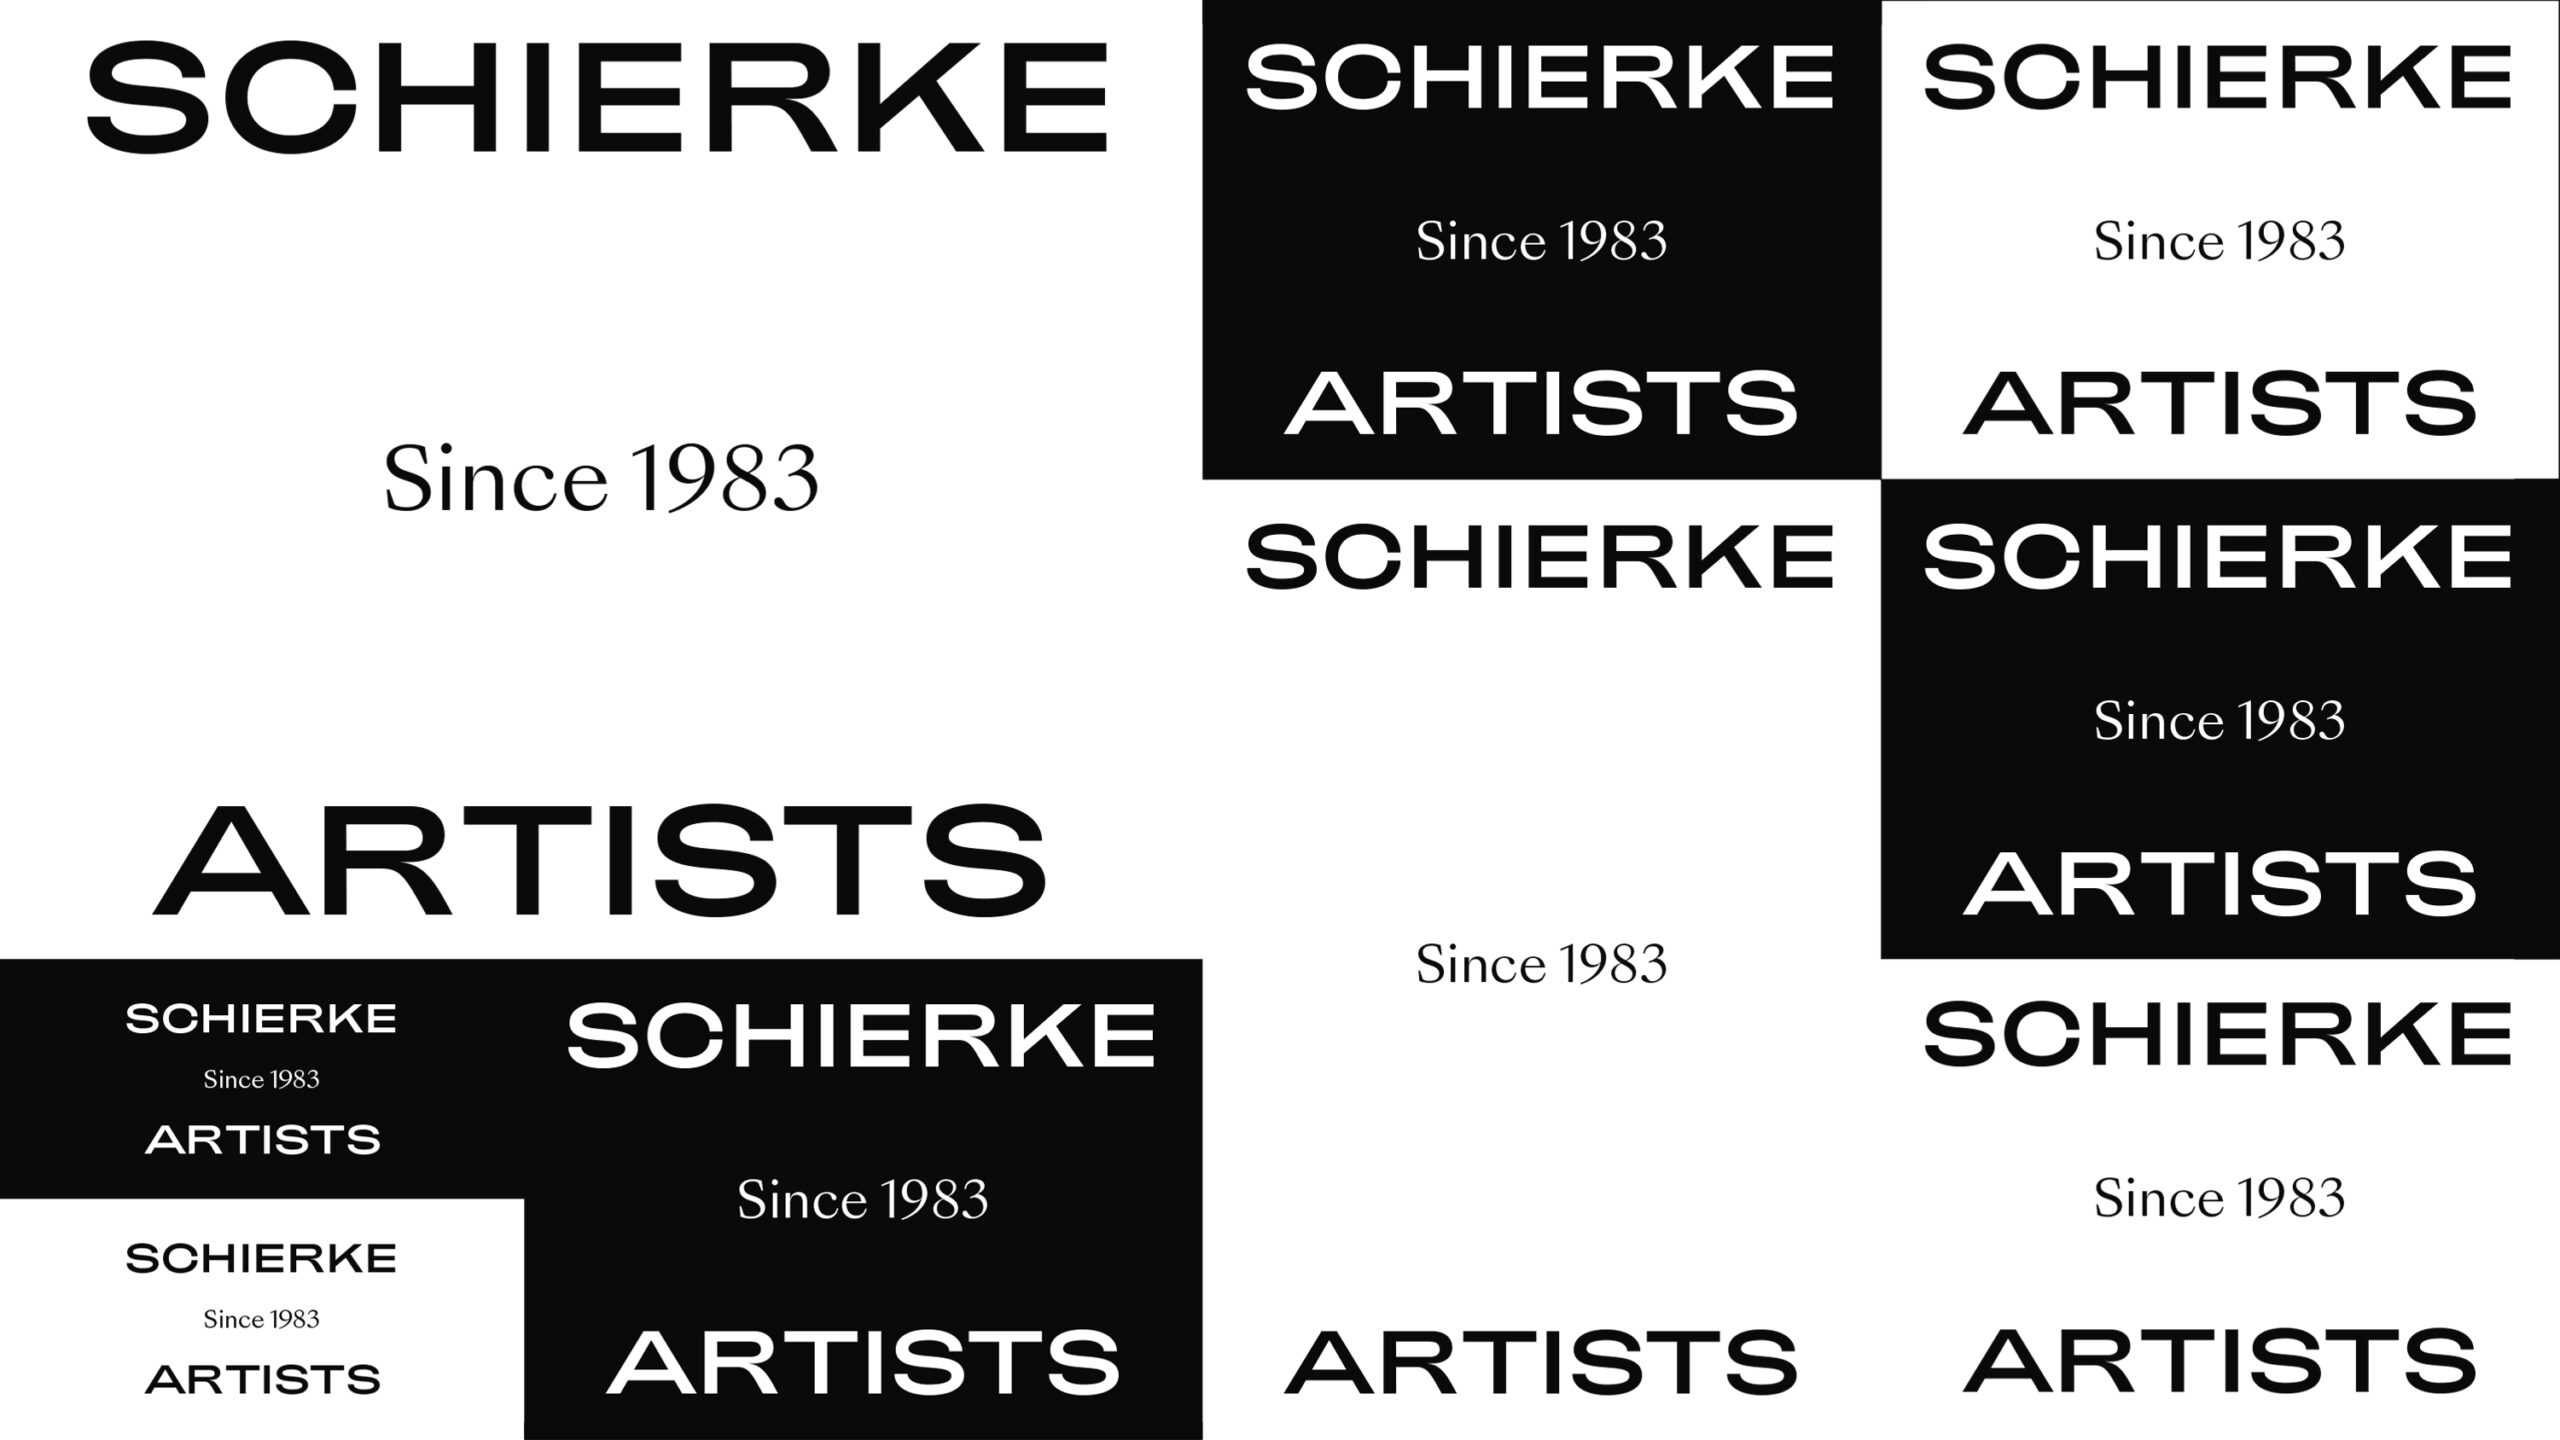 Schierke Artists Logo in different formats